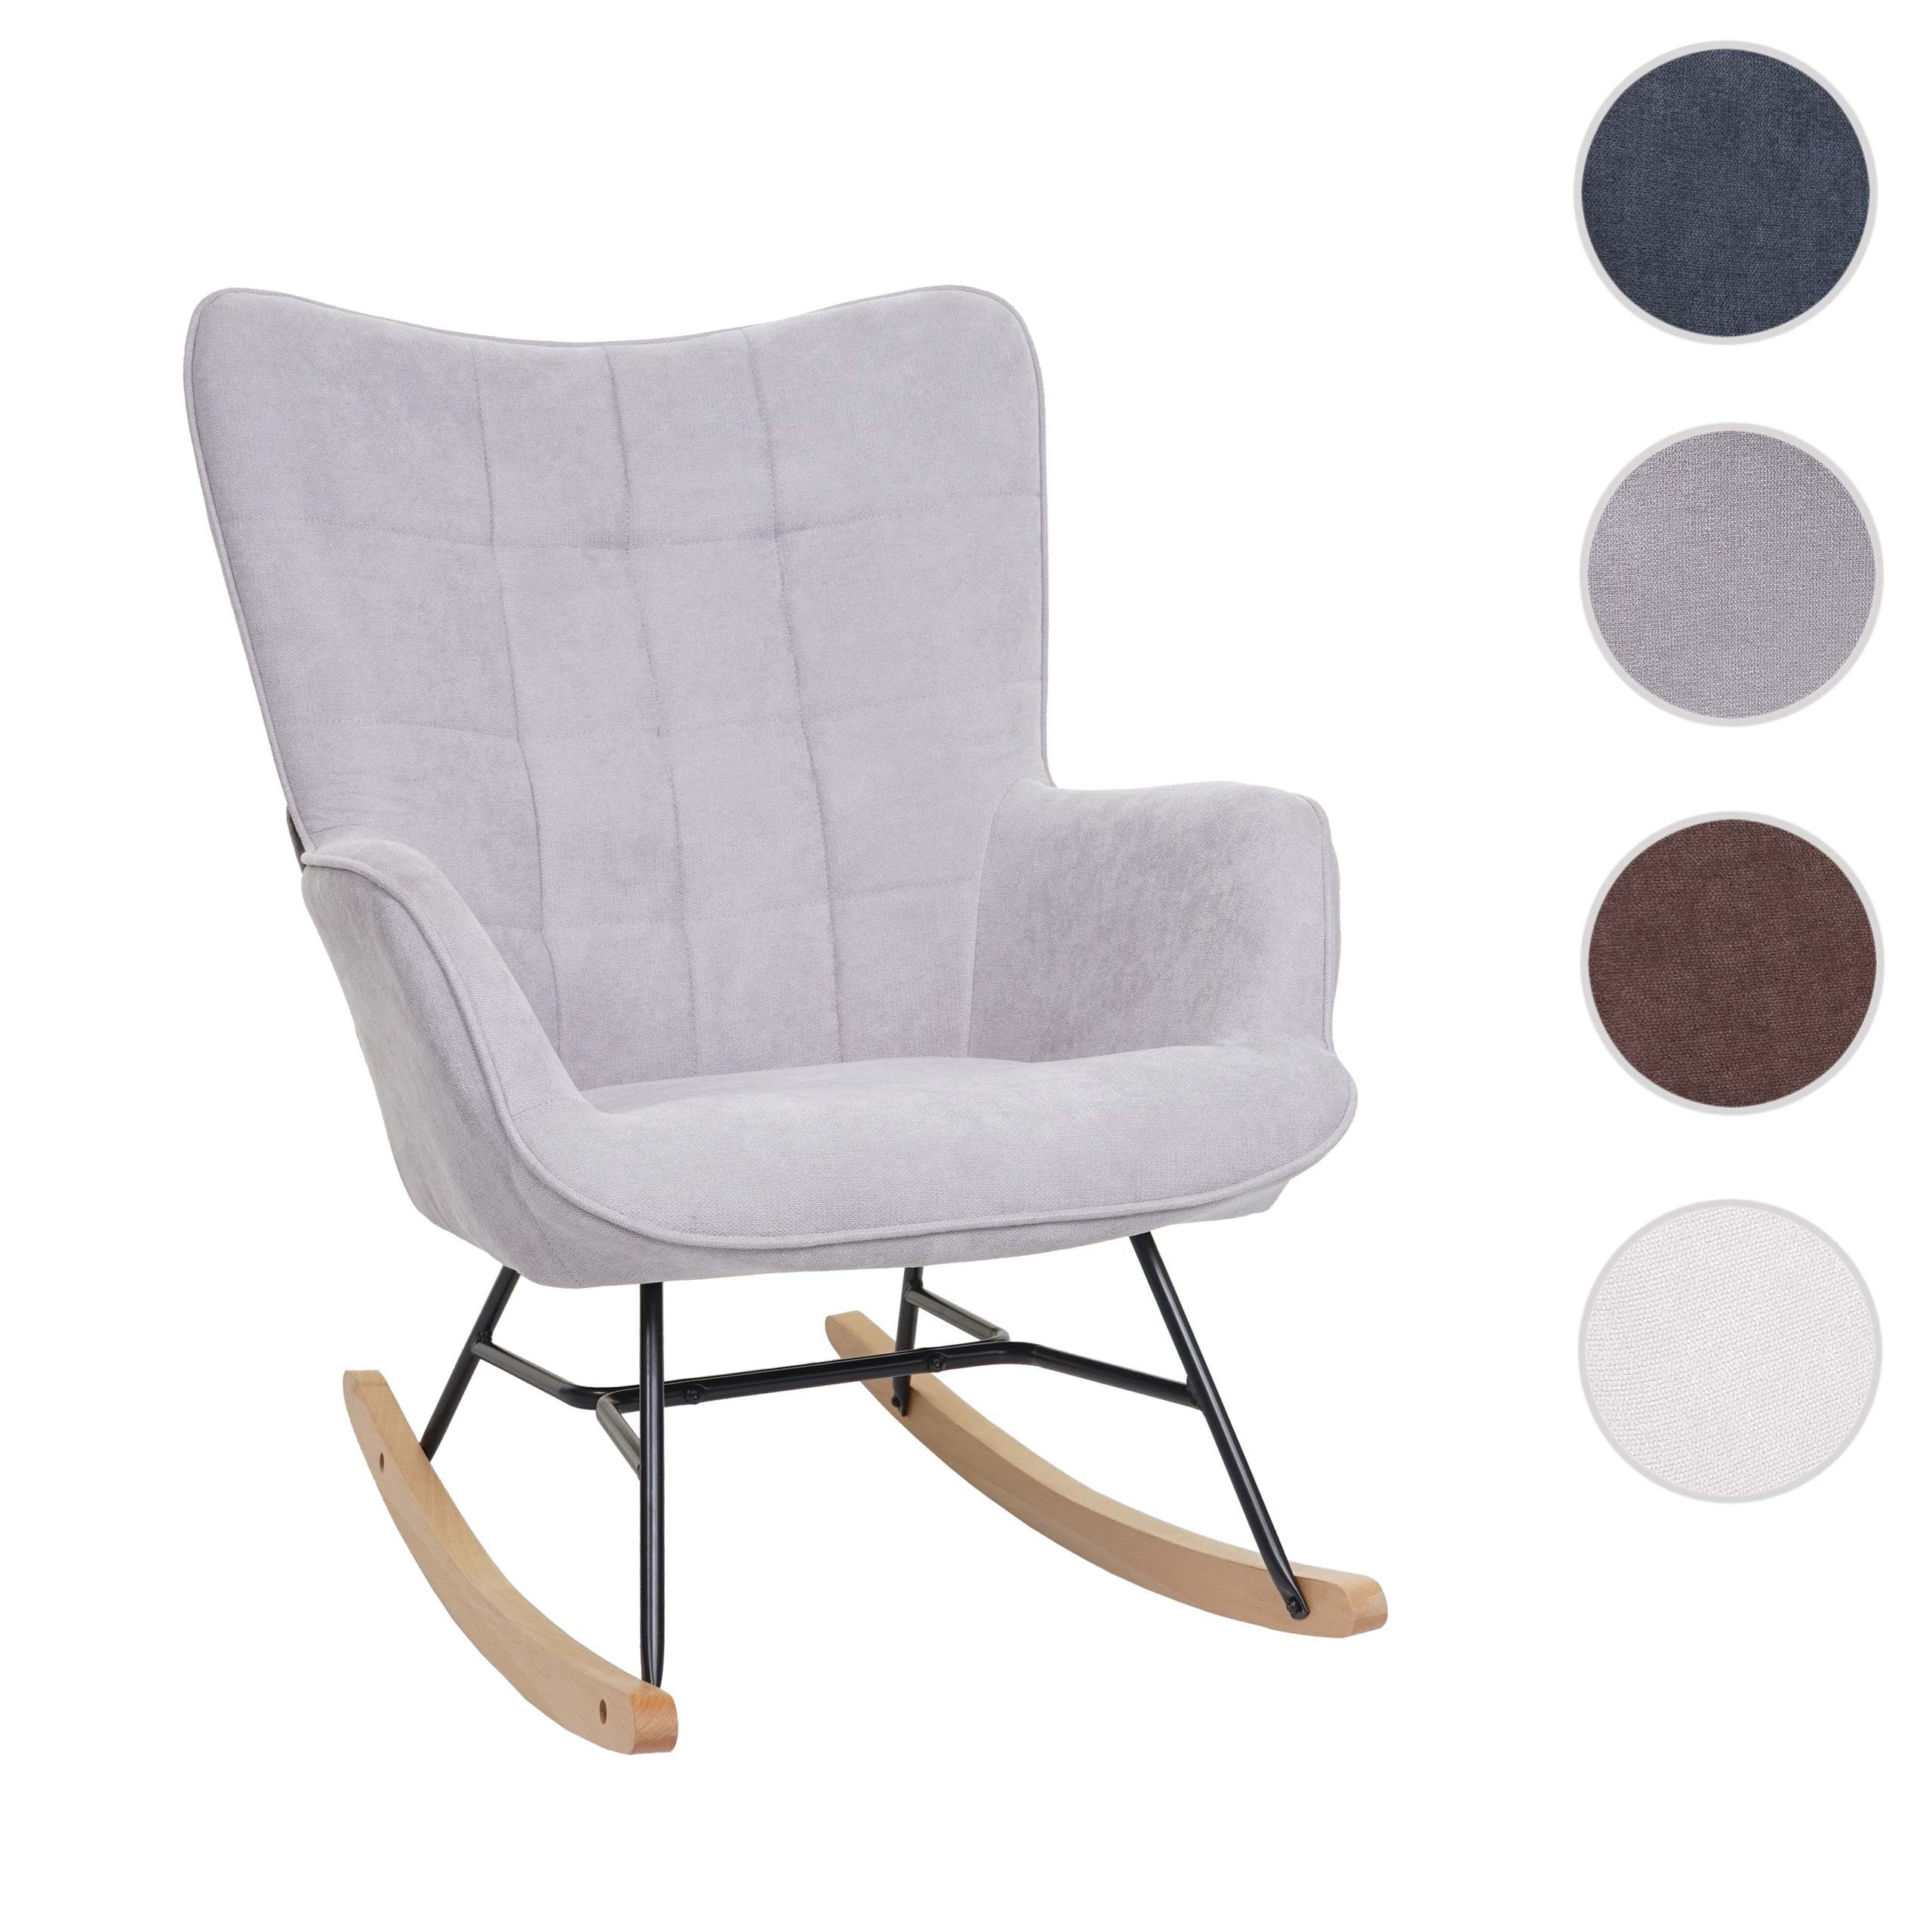 Polsterung grau Große Bequeme Sitzfläche, Schaukelfunktion, | MCW-K36, grau Schaukelstuhl MCW